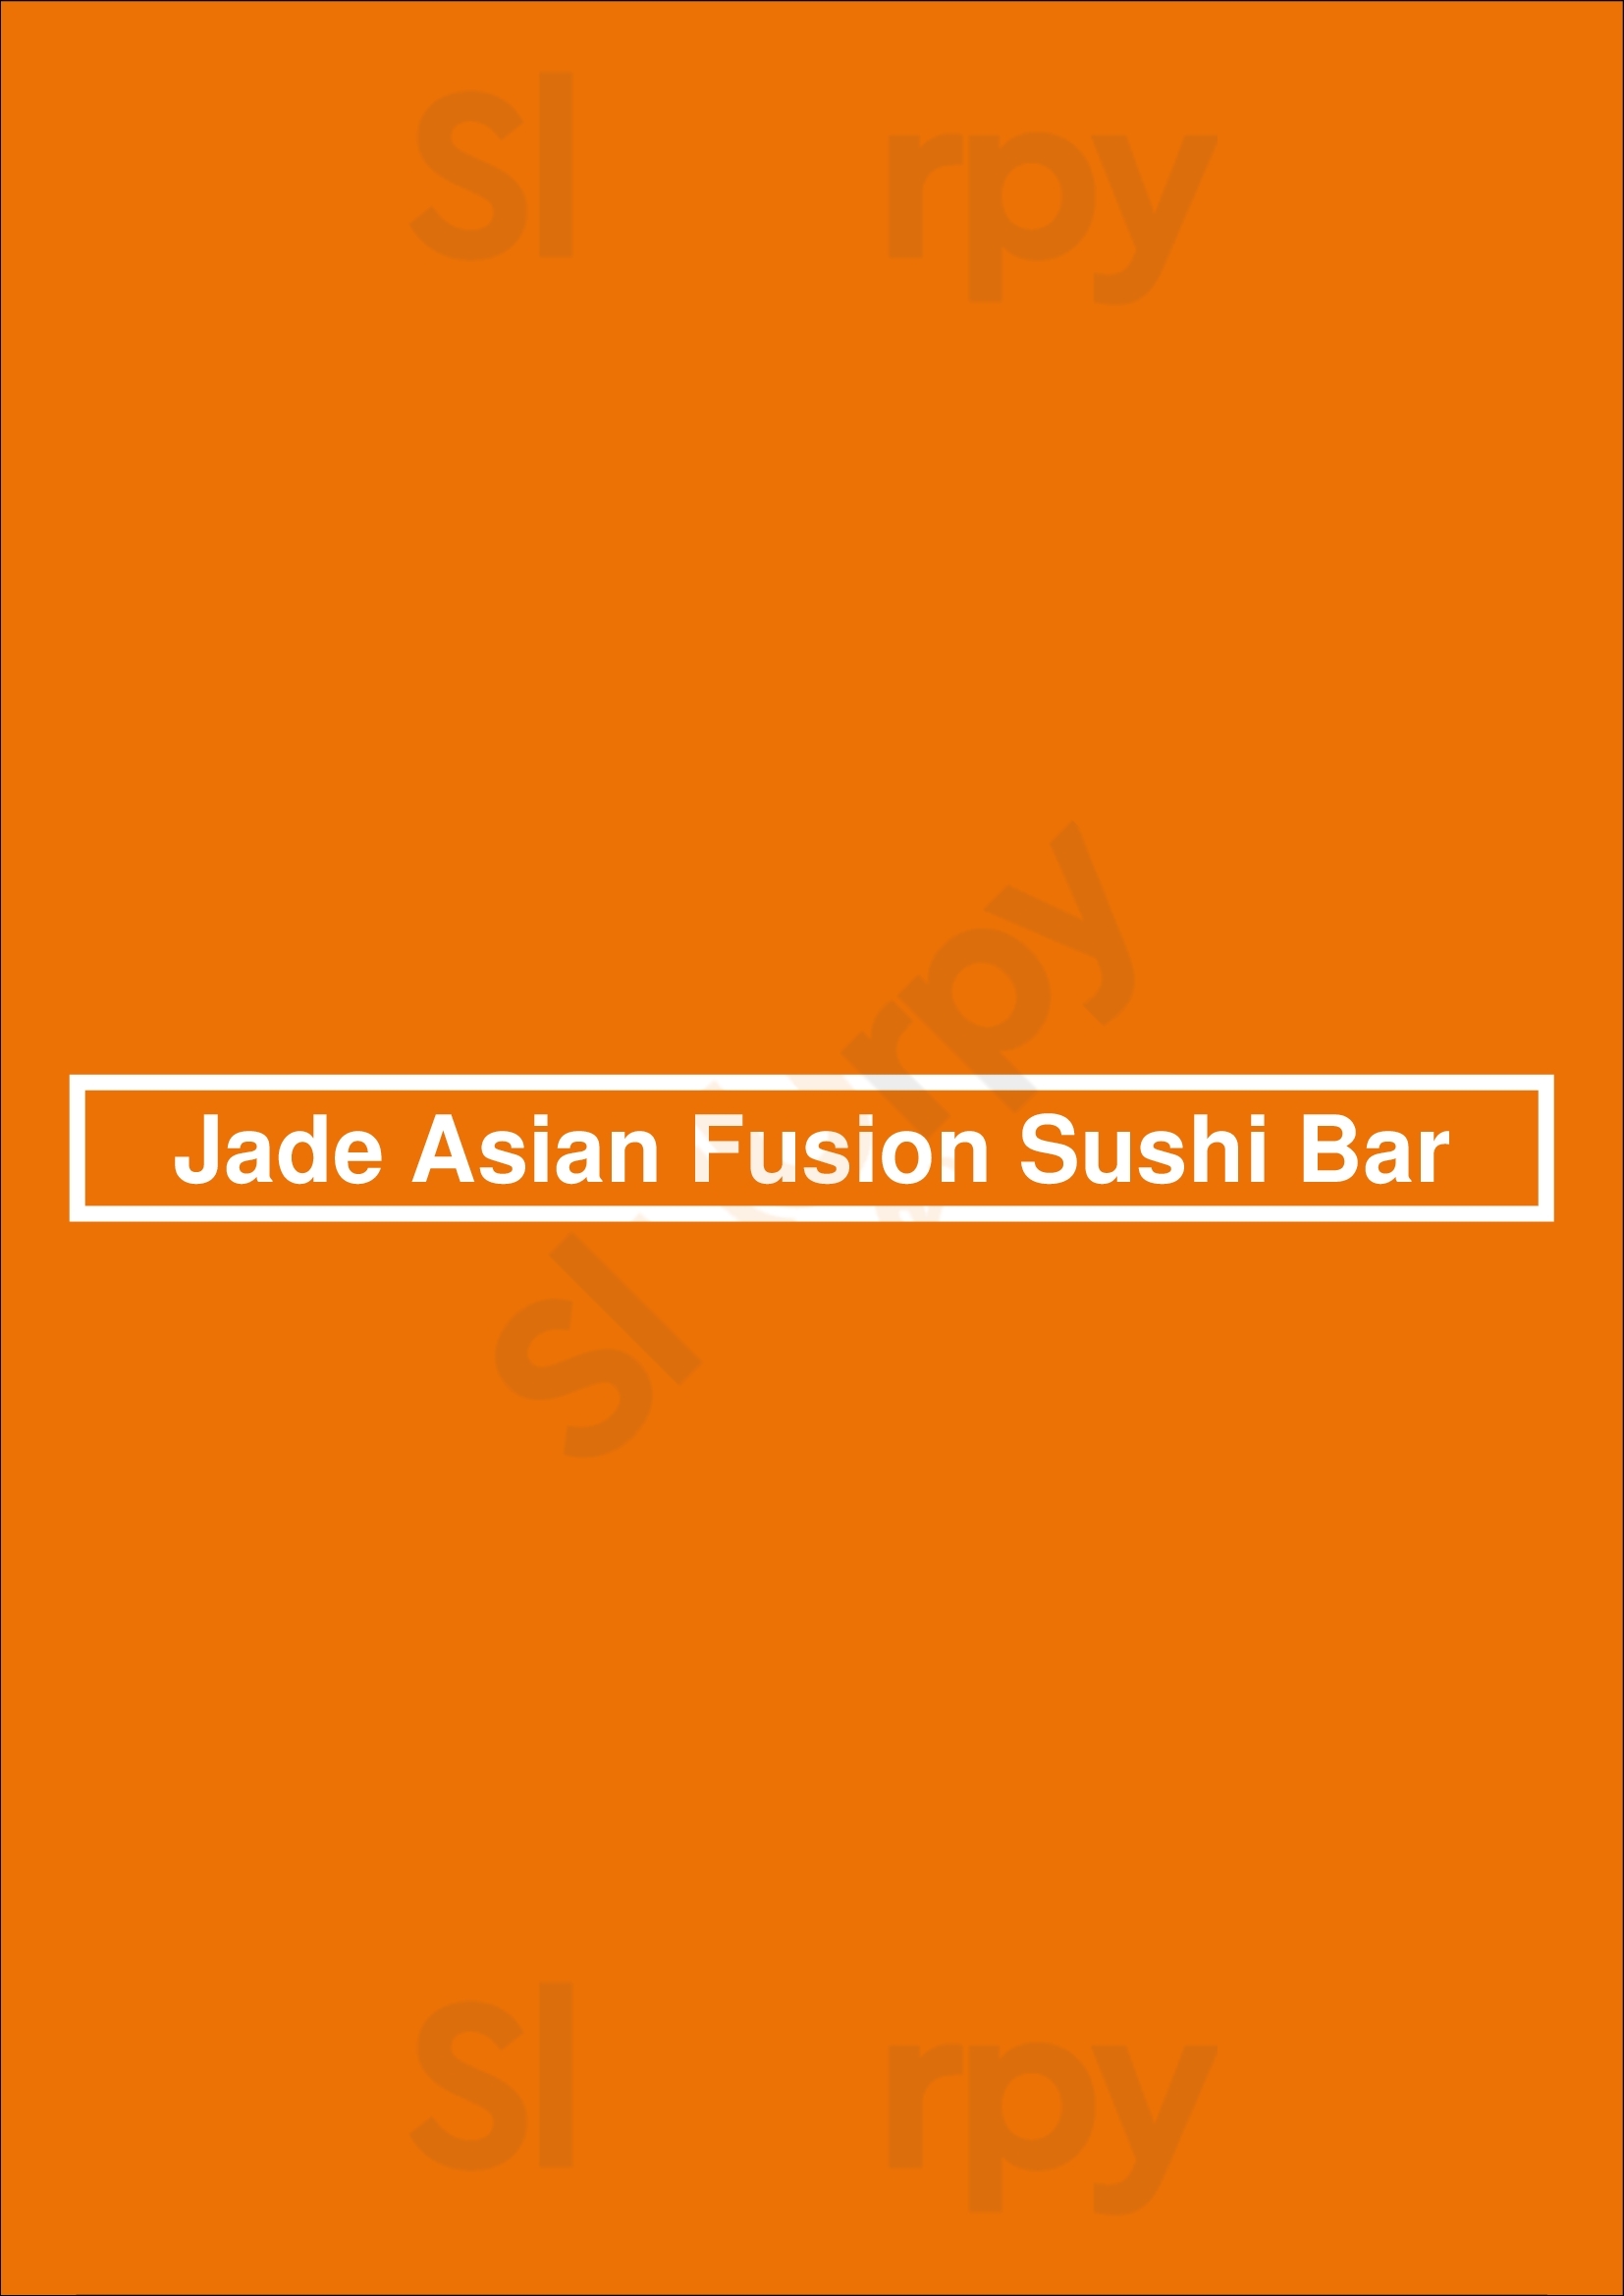 Jade Asian Fusion Sushi Bar Charlotte Menu - 1